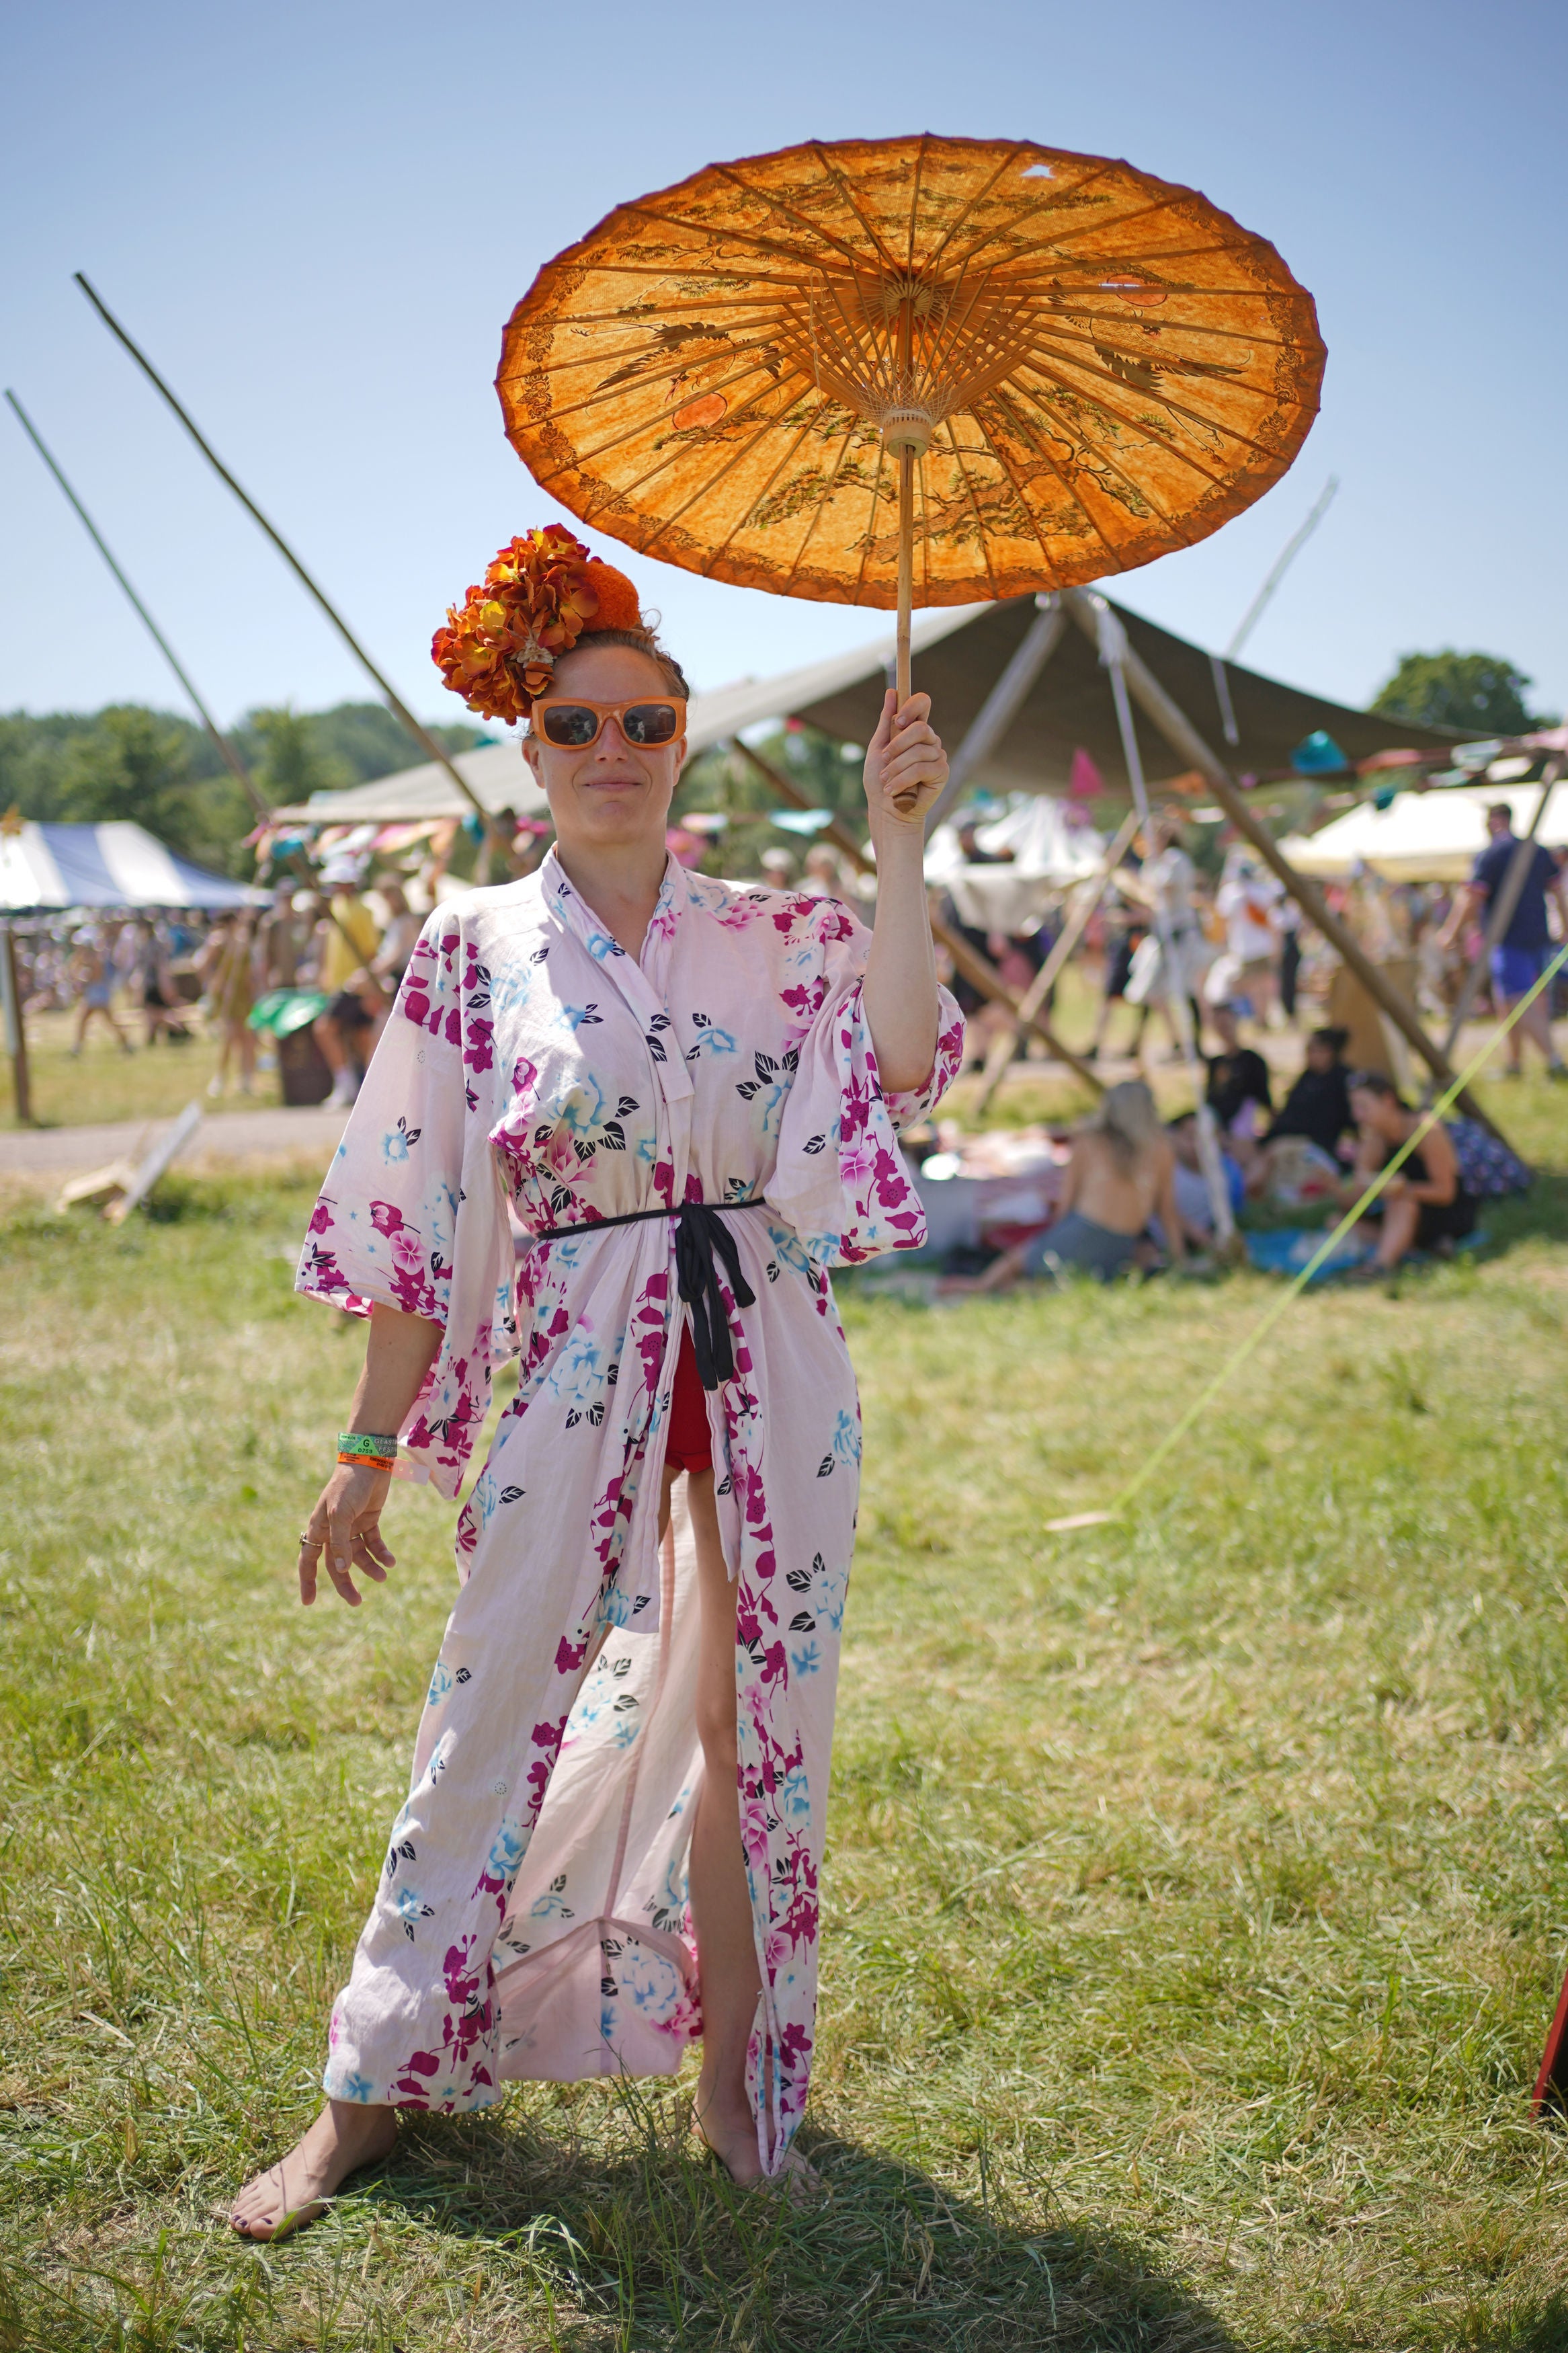 Festivalgoer Sophie Holloway, 35, from Devon, at the Glastonbury Festival